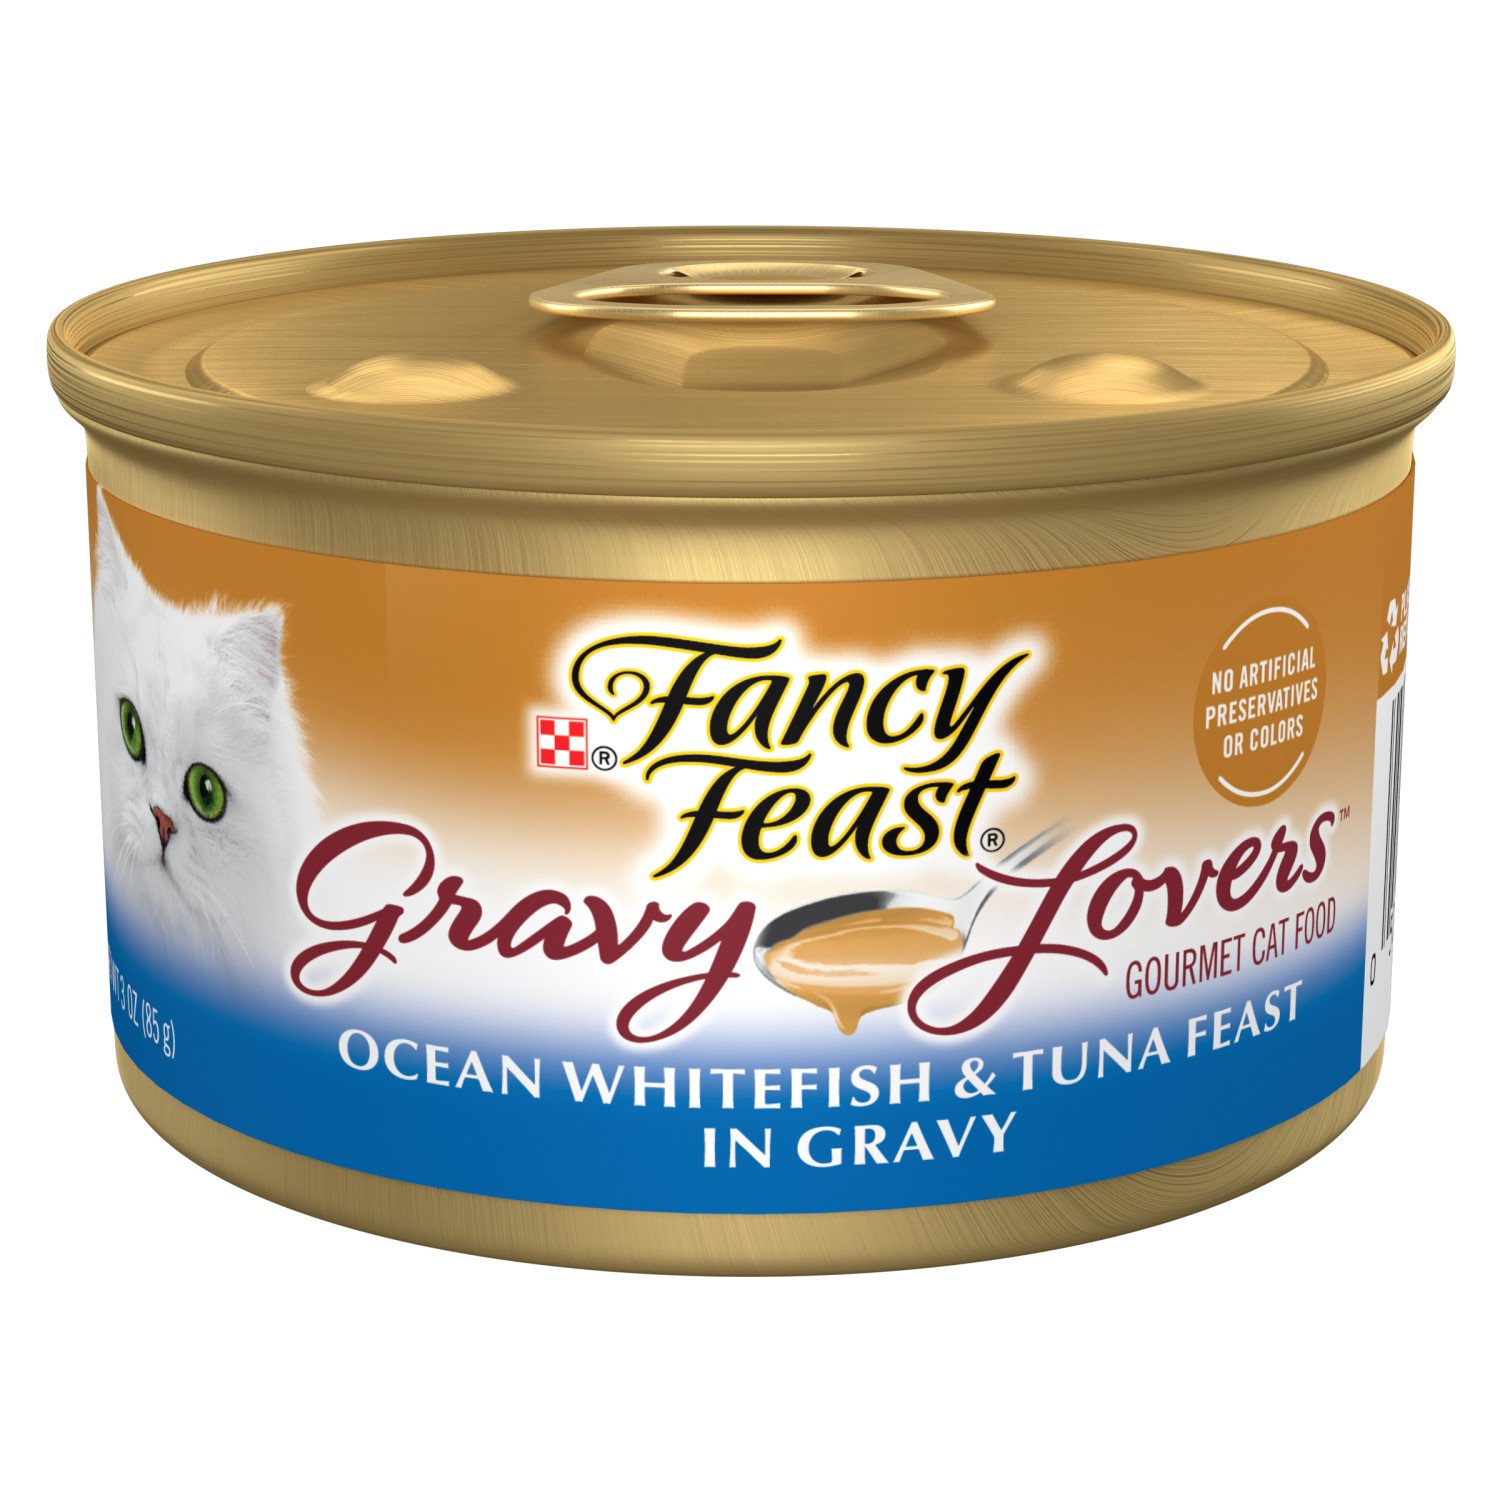 Purina Fancy Feast Gravy Lovers Ocean Whitefish & Tuna ...